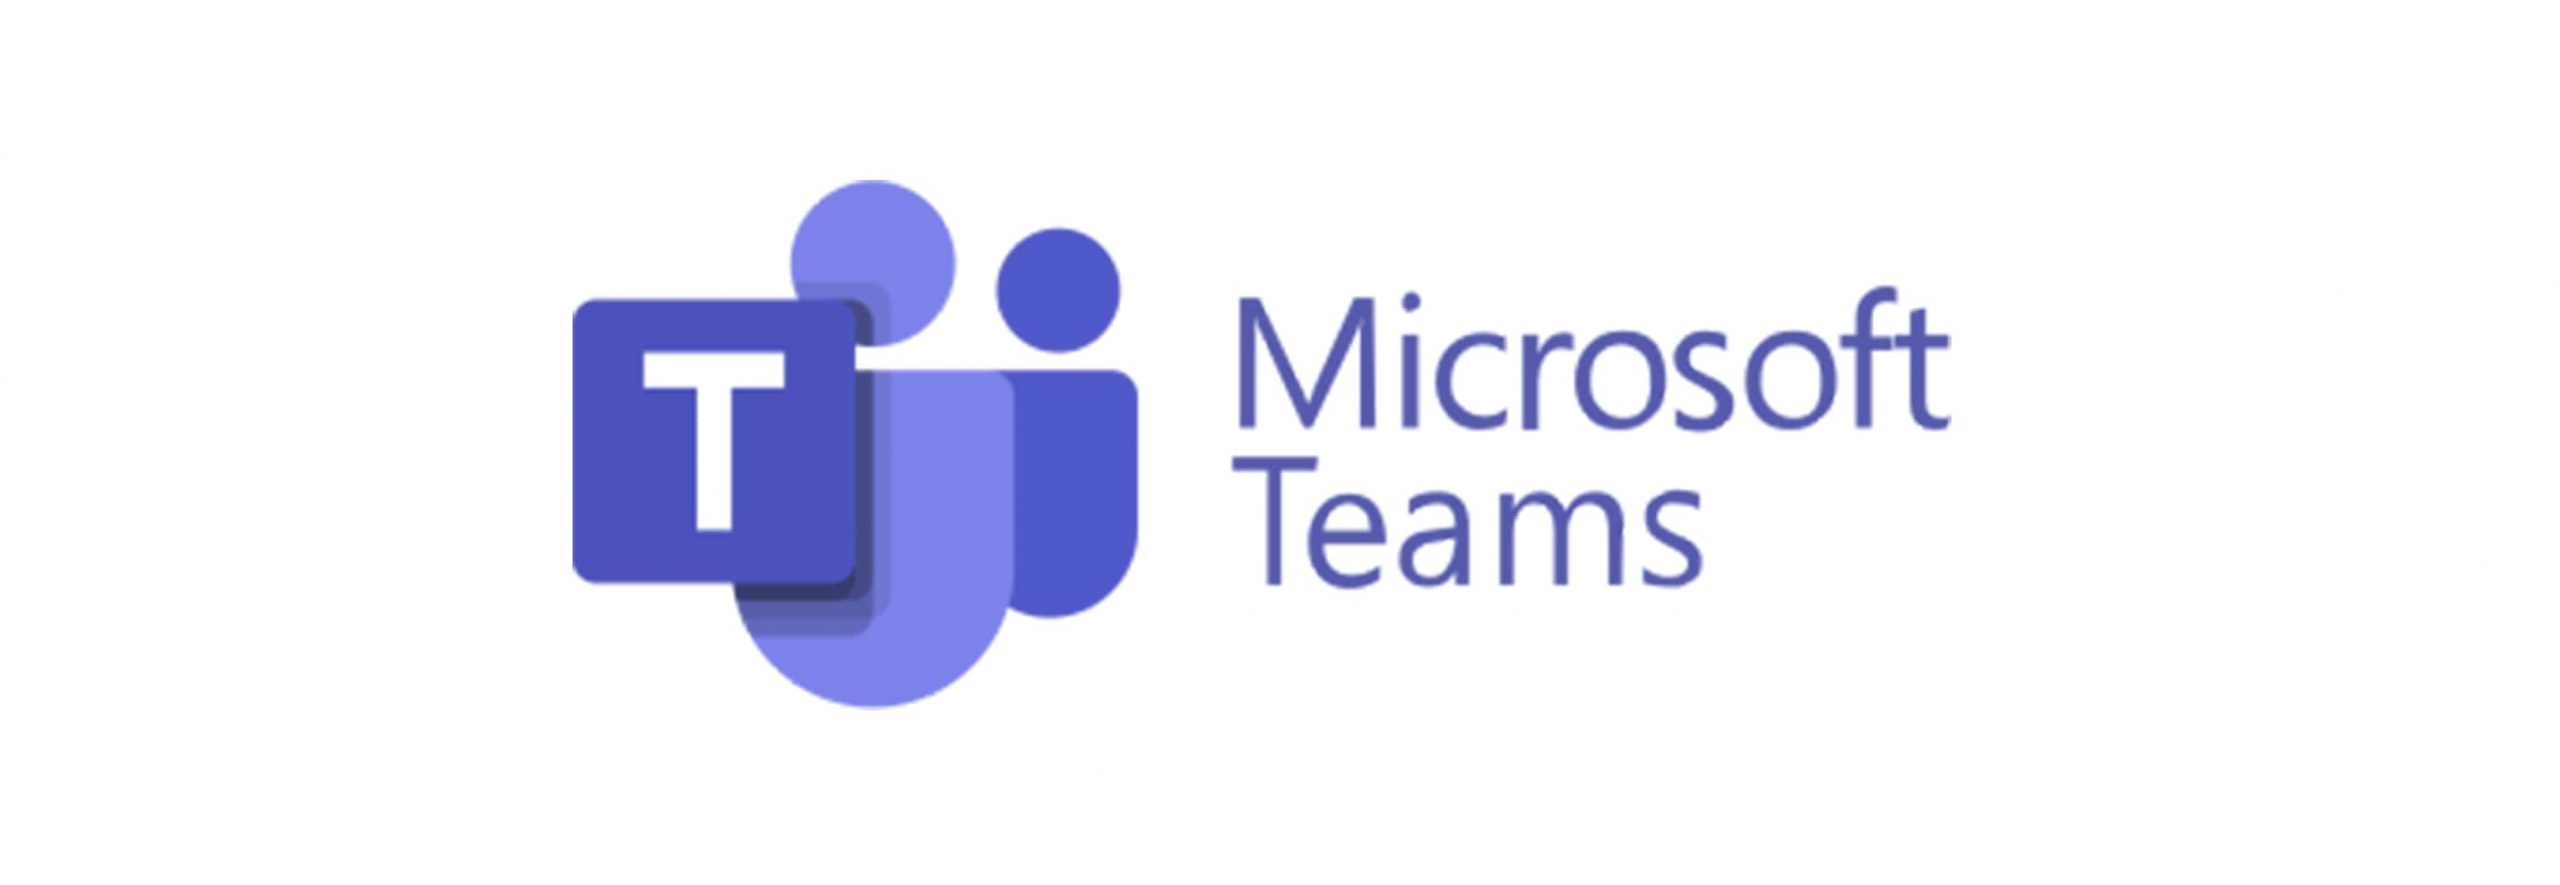 microsoft teams-min